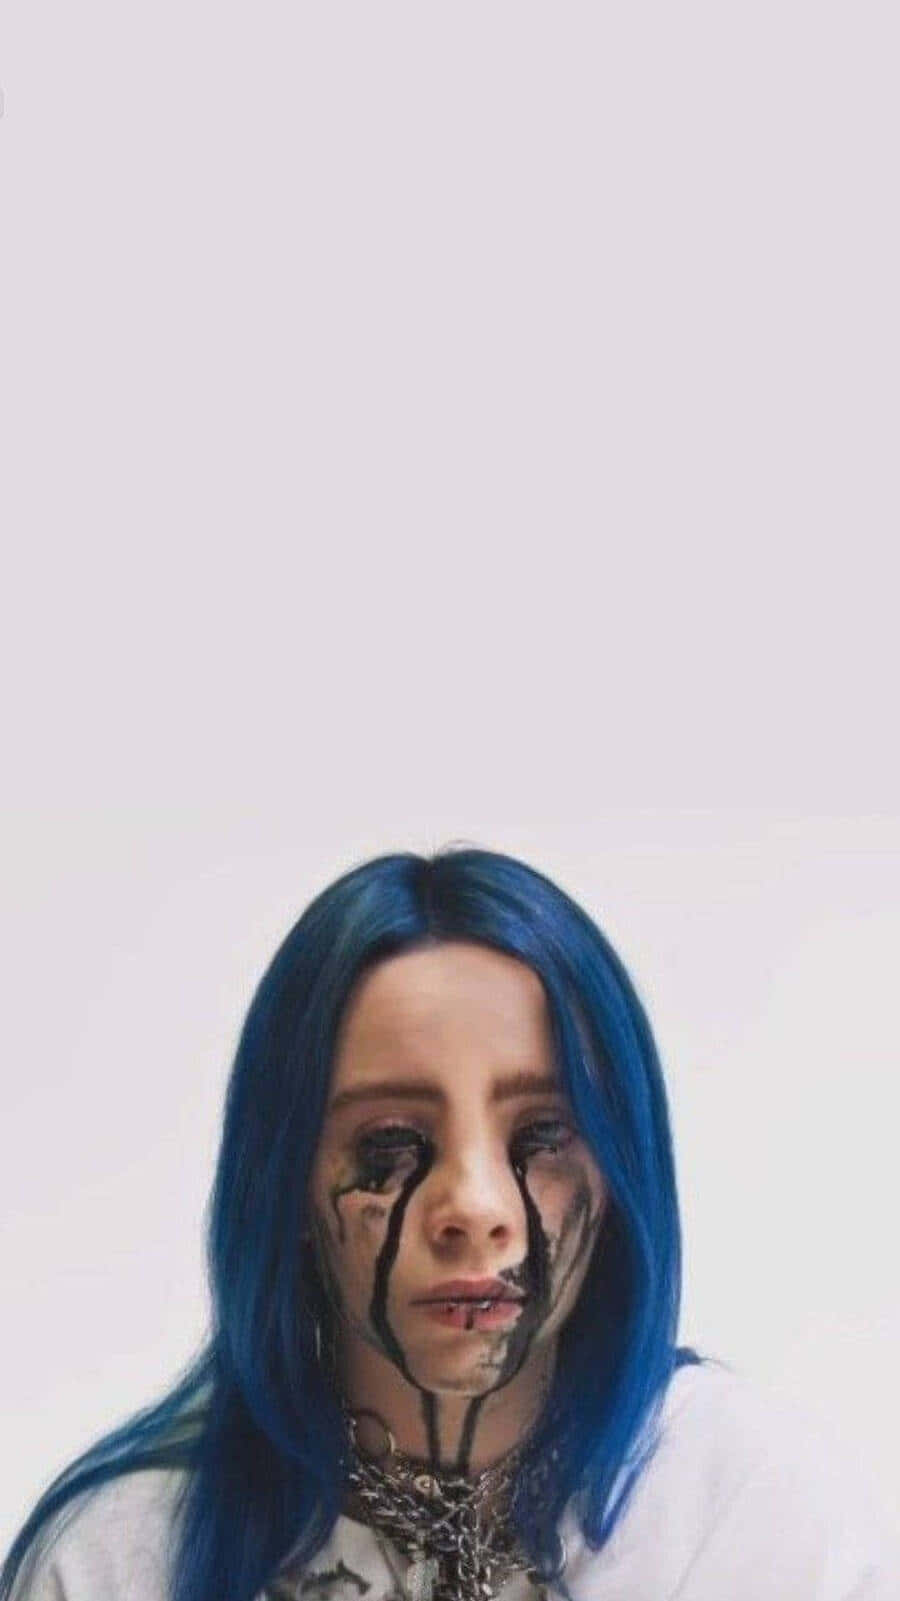 Billie Eilish Emotional Portrait Wallpaper